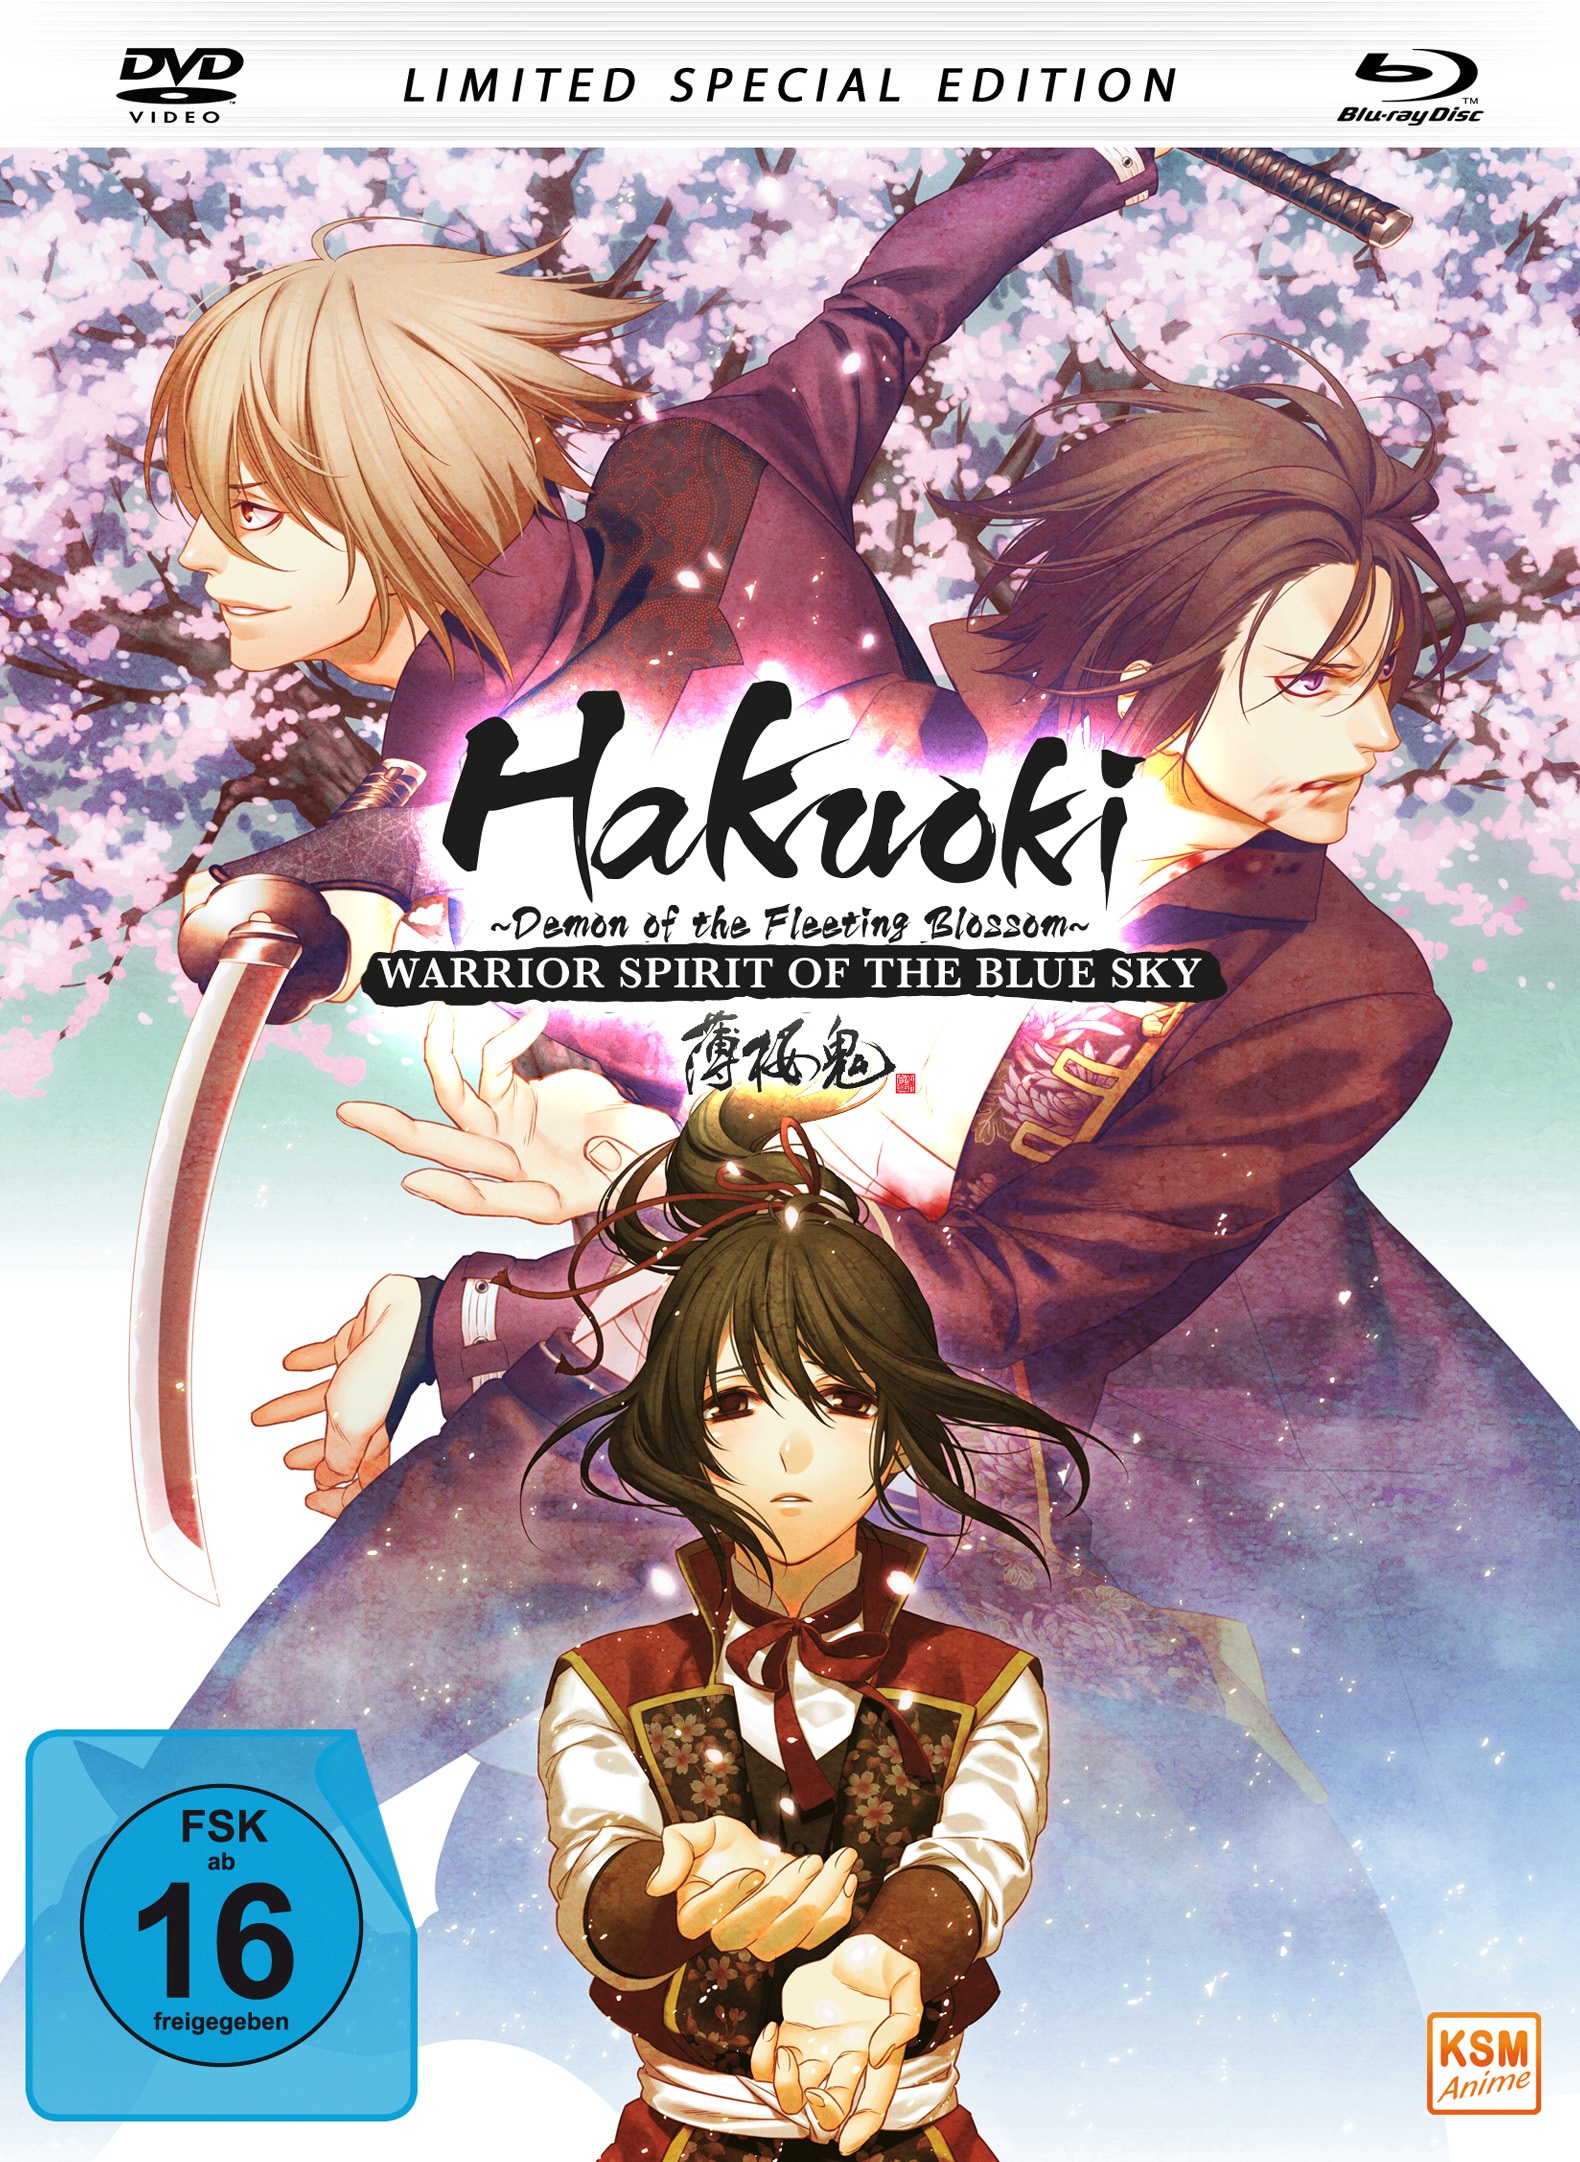 Hakuoki - The Movie 2: Demon of the Fleeting Blossom - Warrior Spirit of the Blue Sky [Mediabook inkl. DVD + Blu-ray]